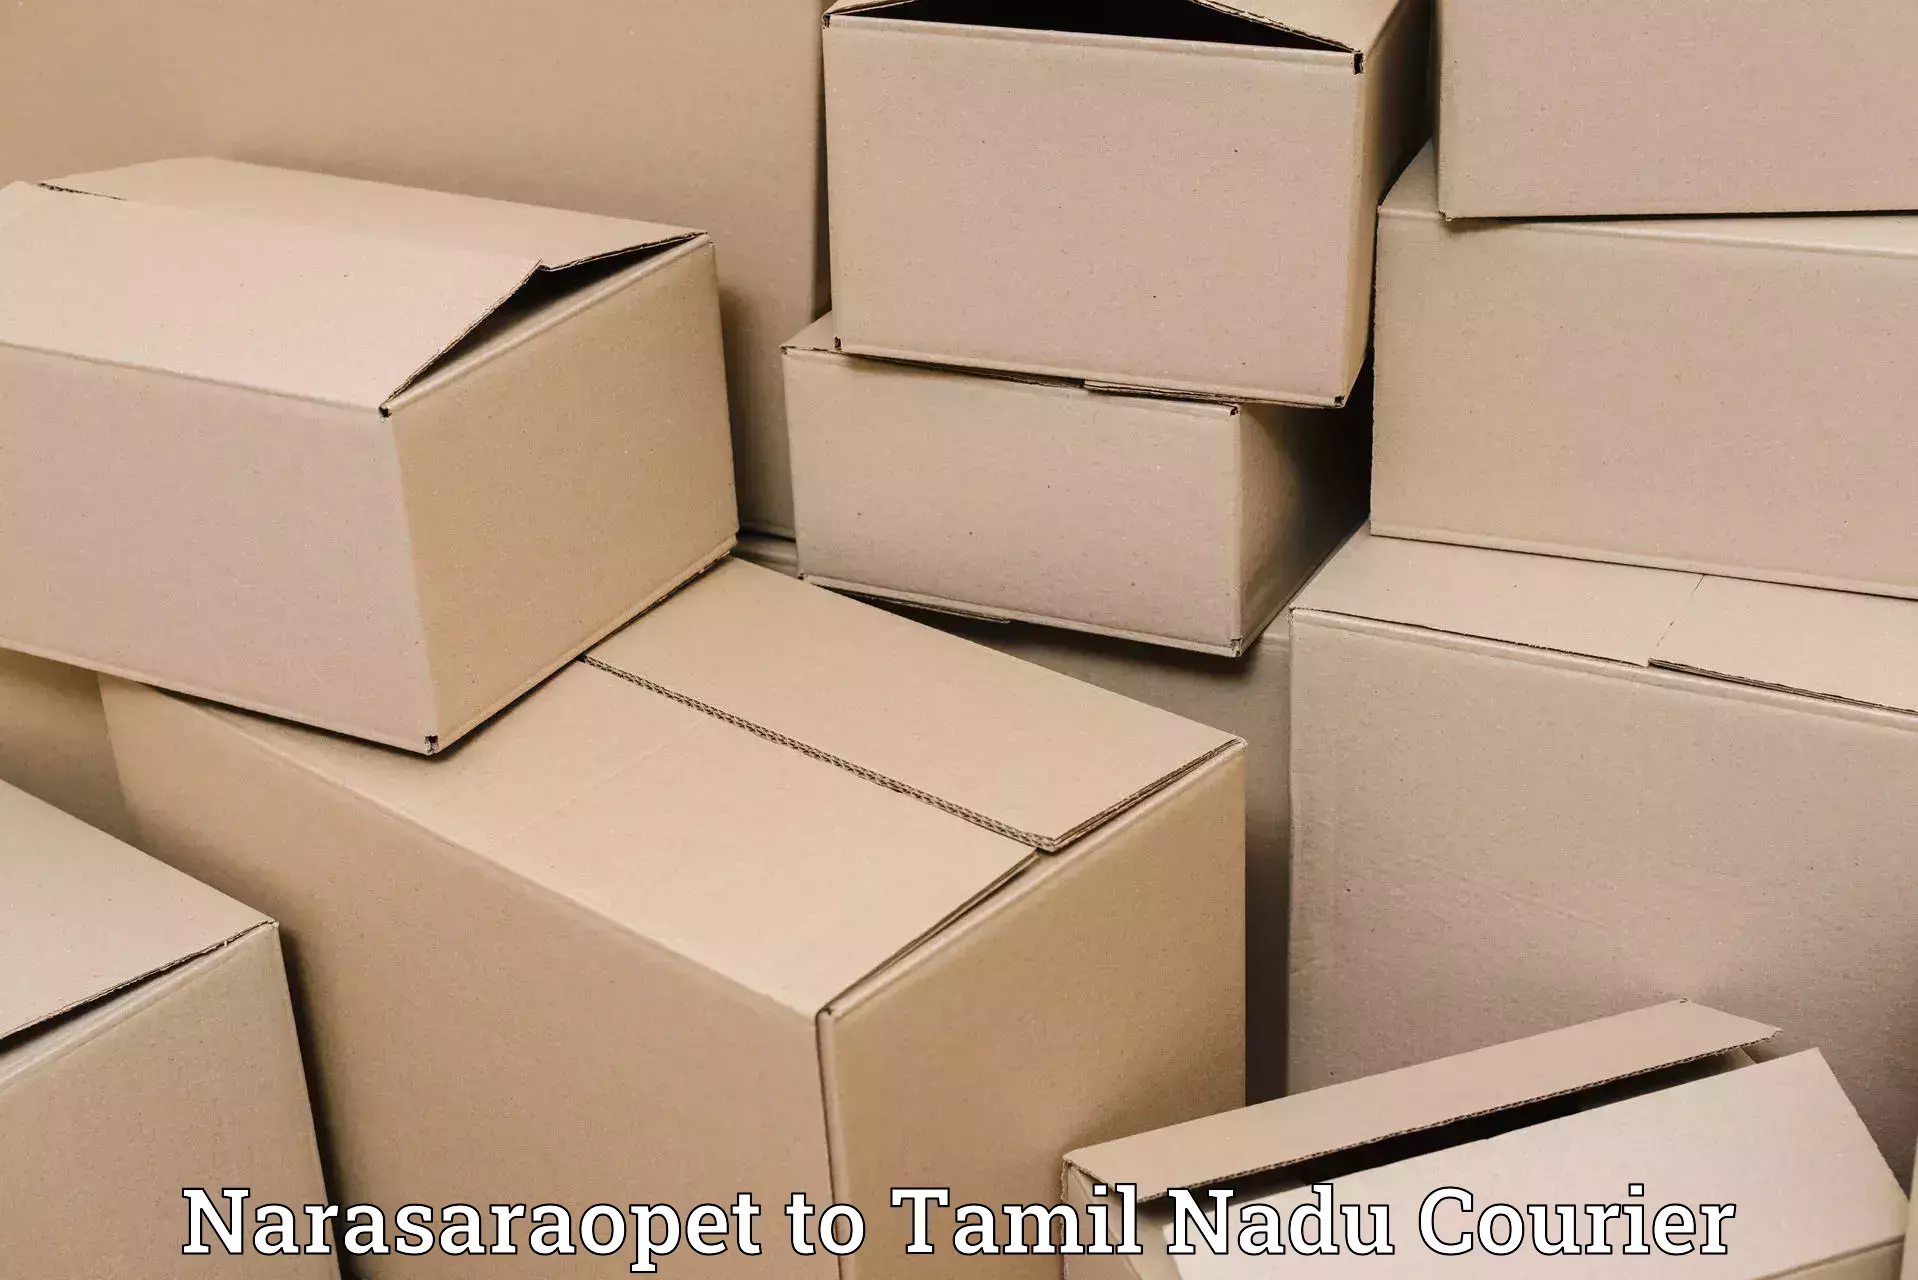 Urgent courier needs Narasaraopet to Villupuram